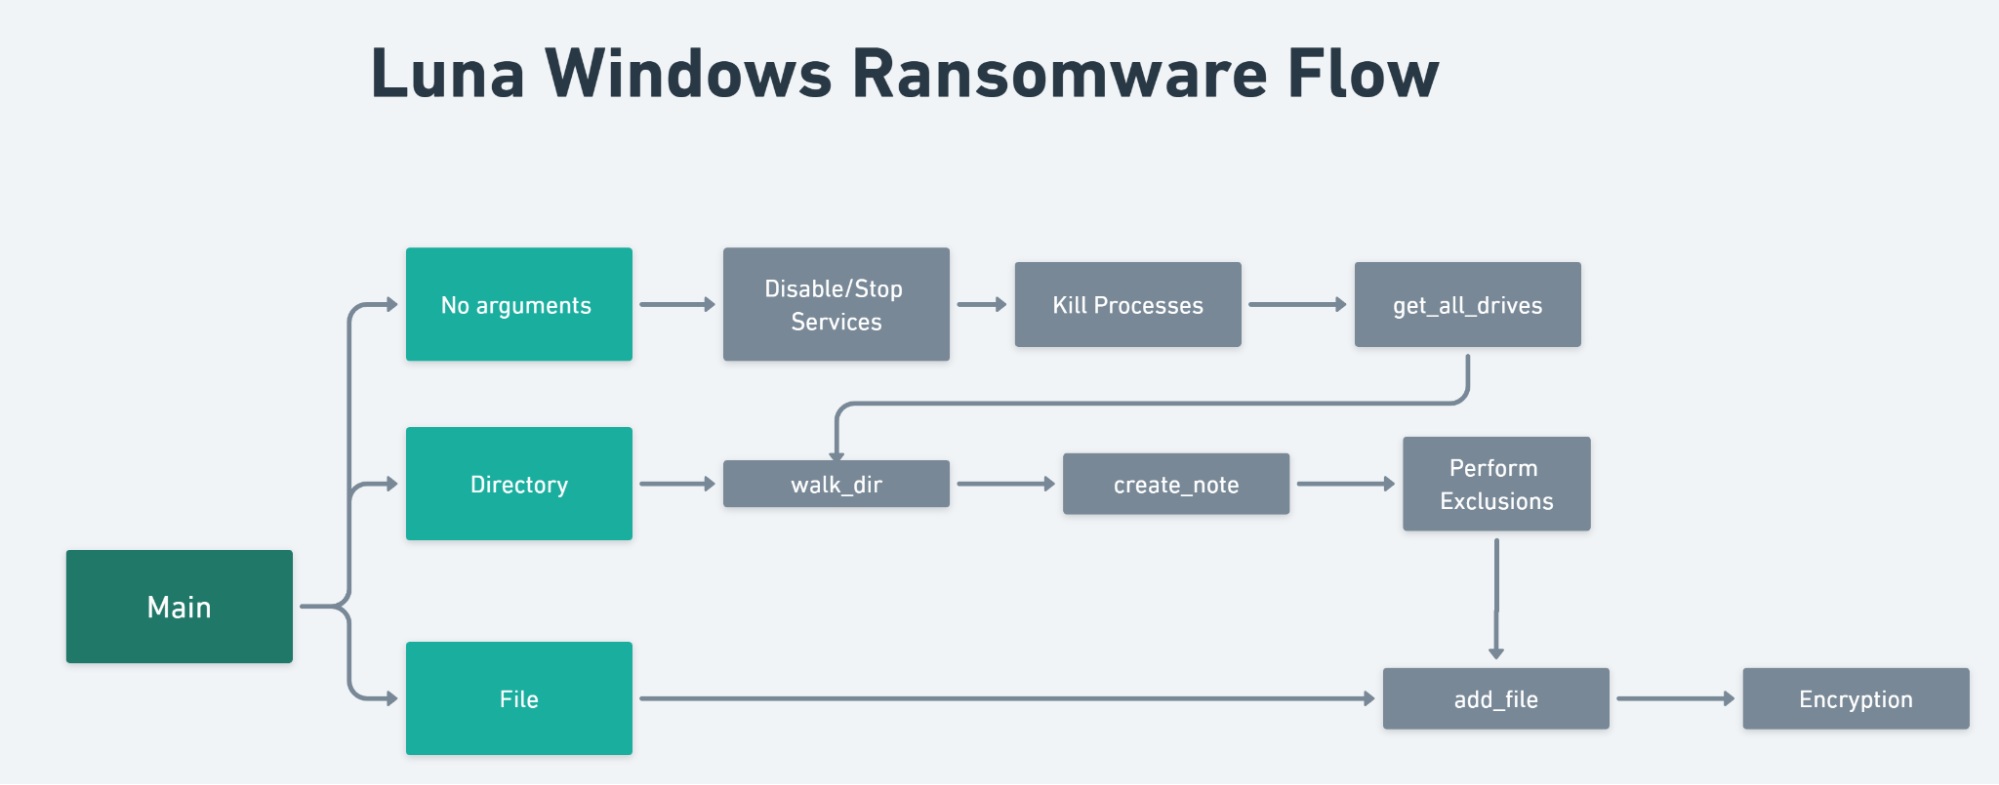 LUNA ransomware flow for Windows